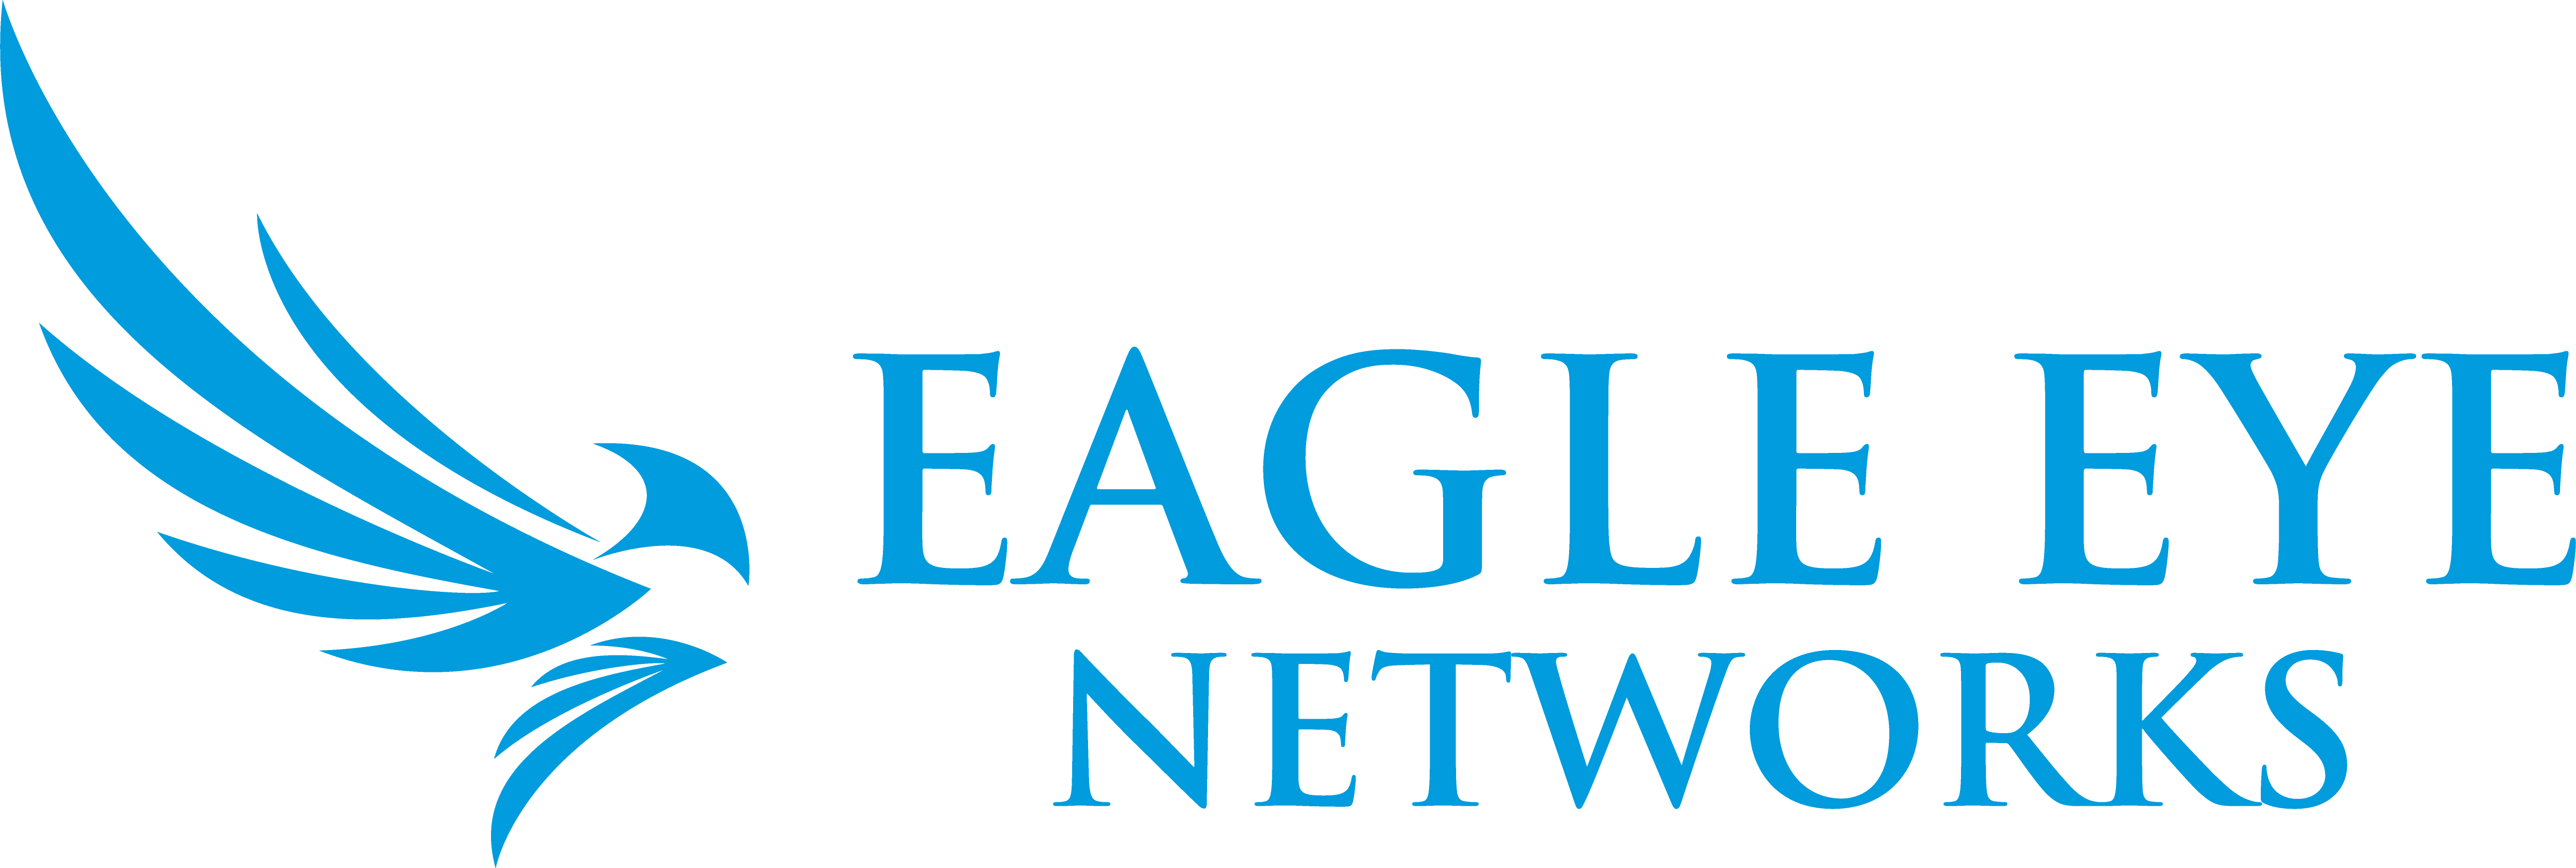 Eagle Eye Logo.png